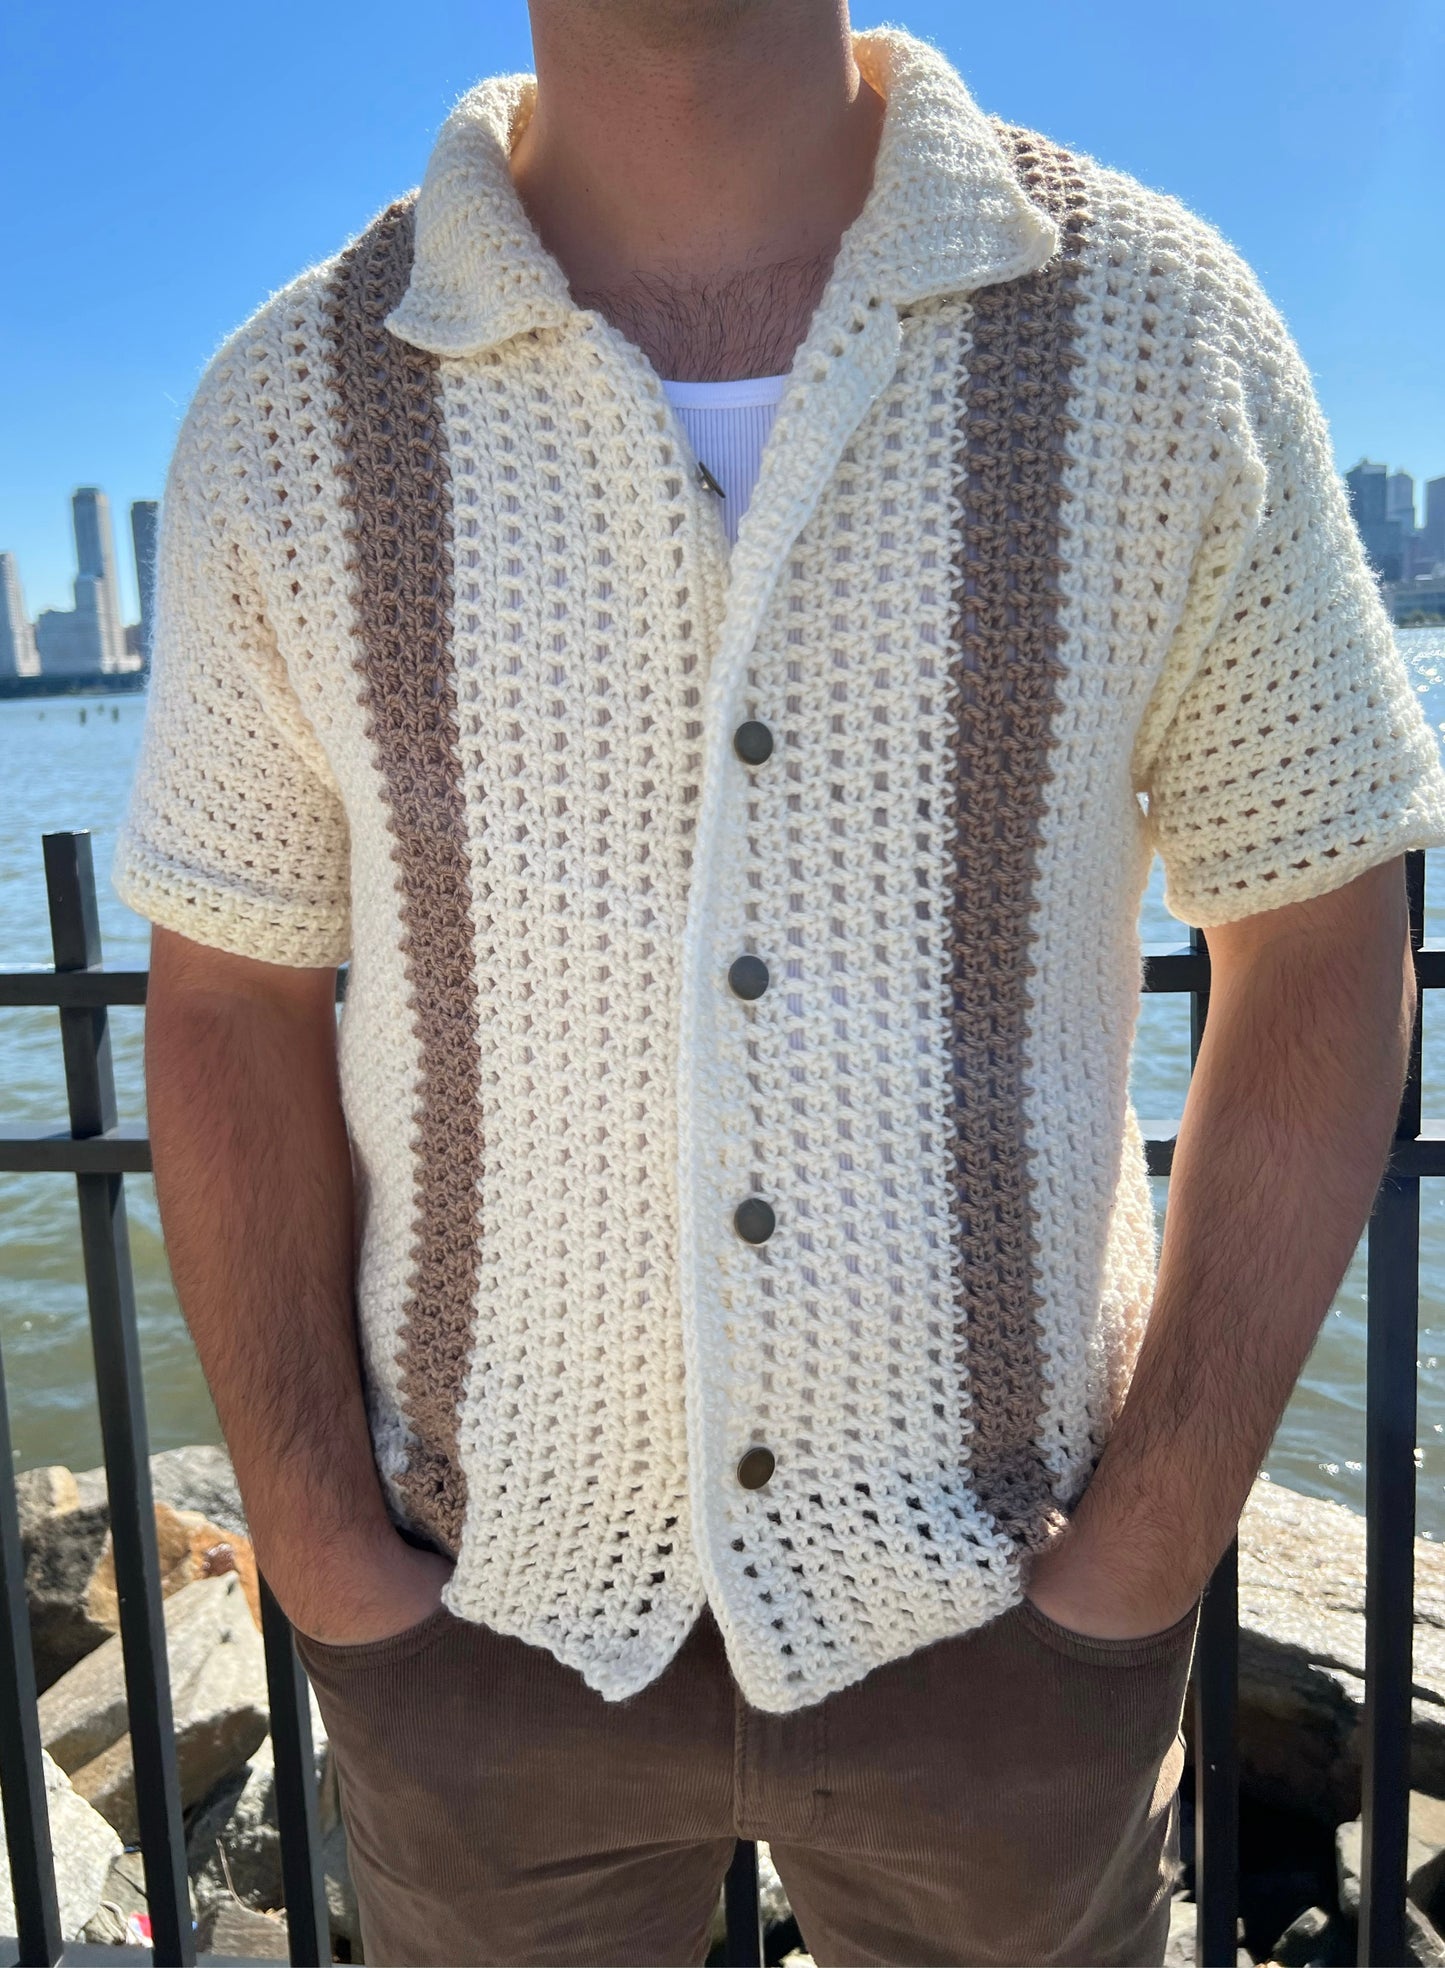 Imatra Top Crochet Pattern